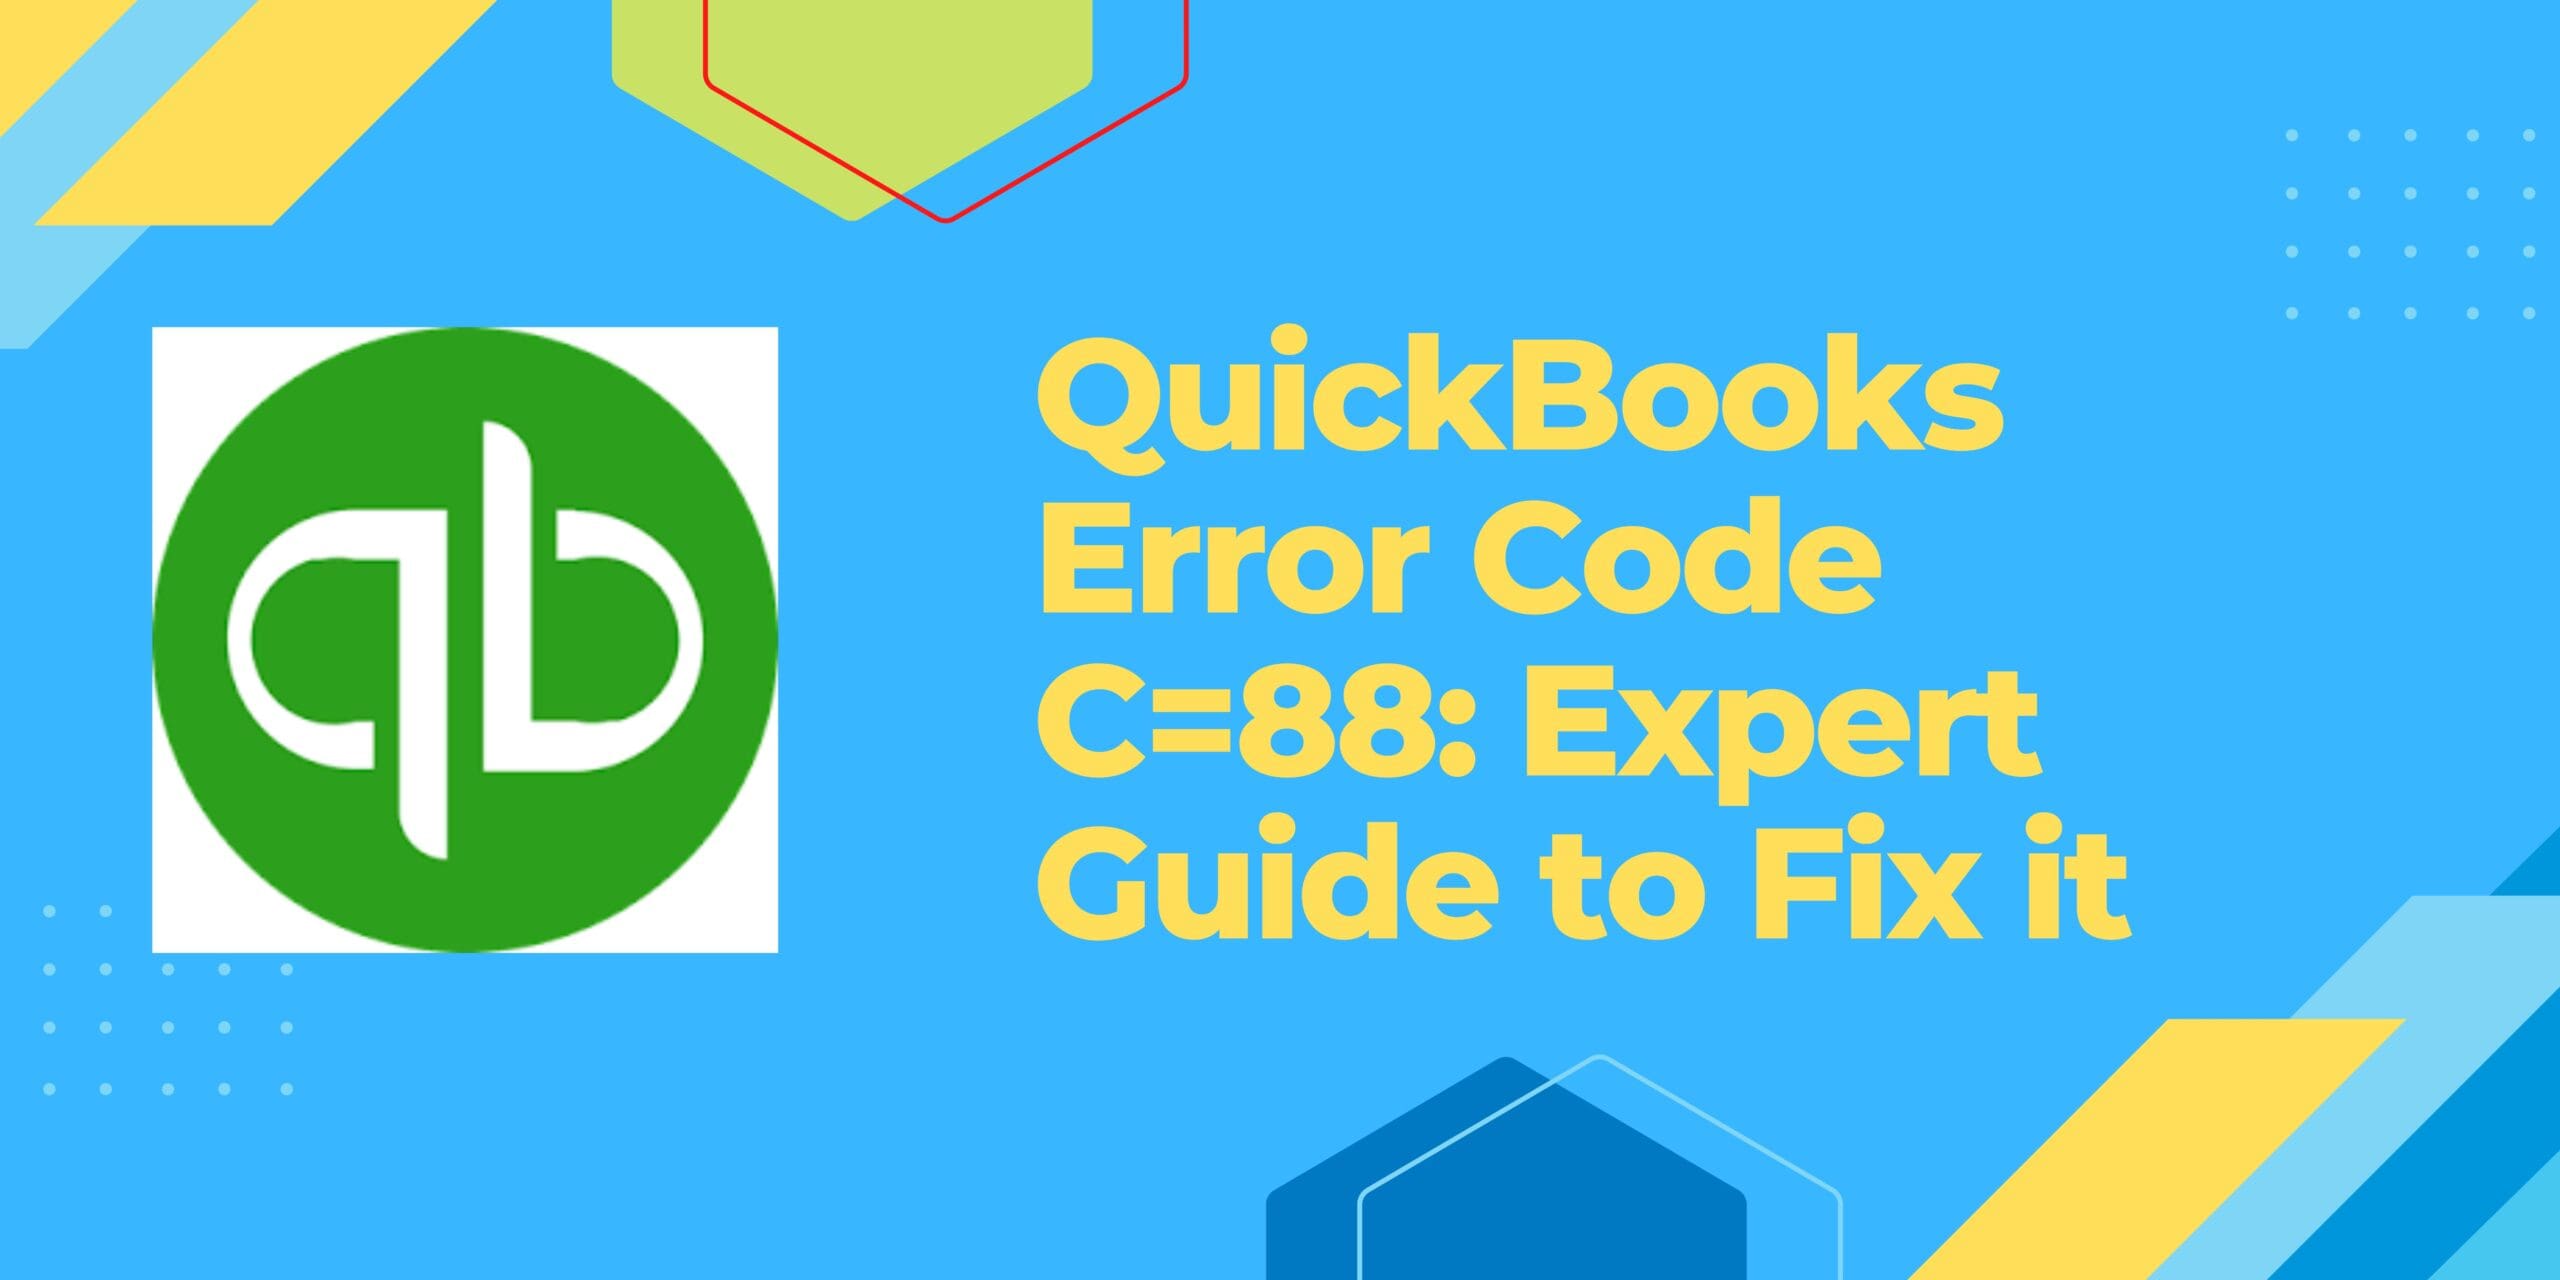 QuickBooks Error Code C=88: A Quick Fix Manual For Resolution